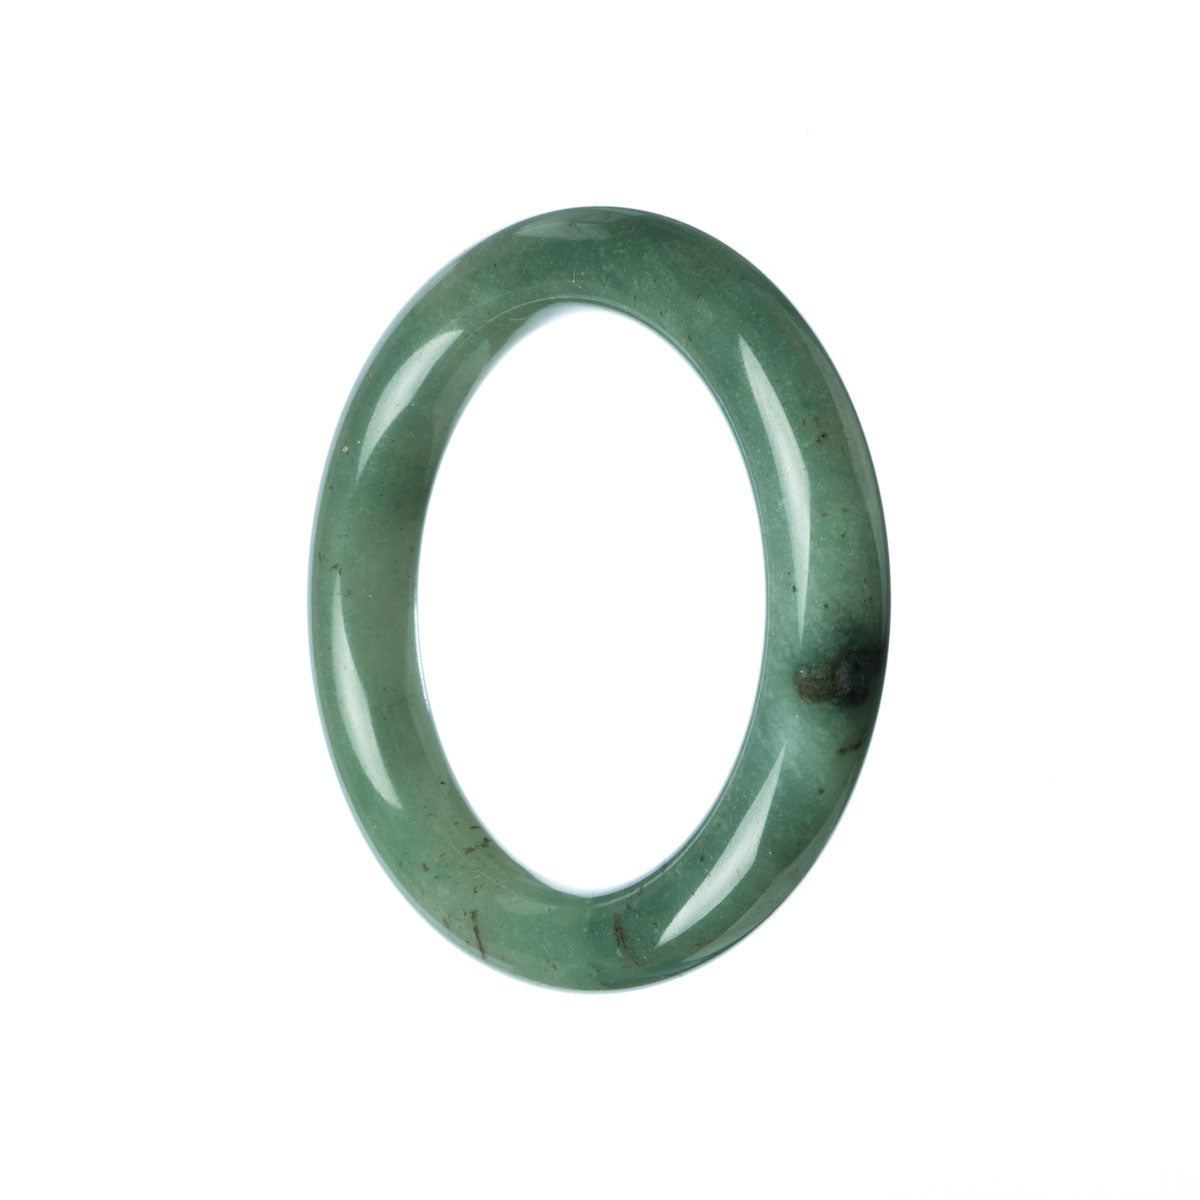 Authentic Type A Green Burmese Jade Bangle Bracelet - 51mm Round